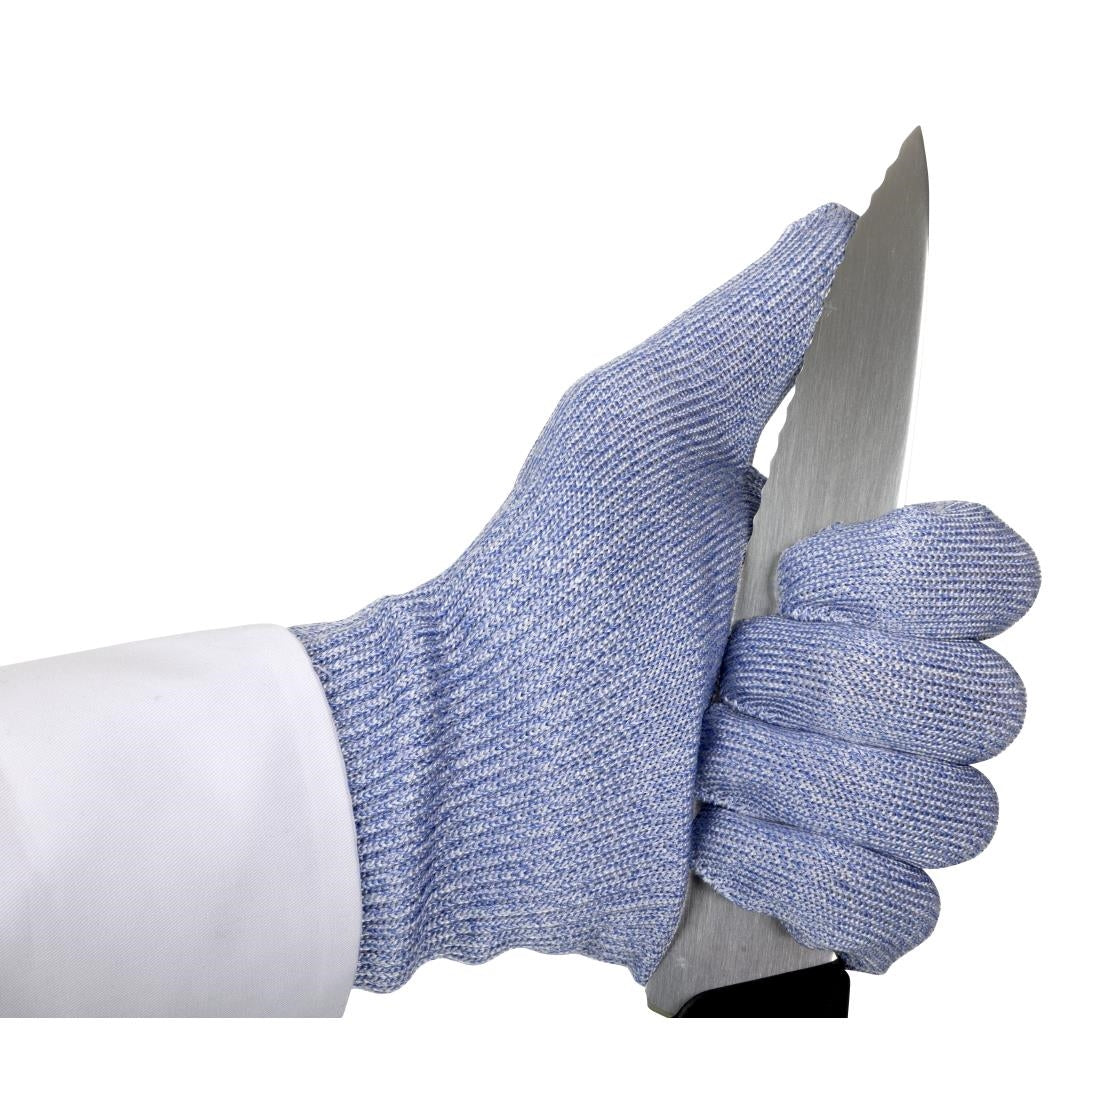 GD719-L Blue Cut Resistant Glove Size L JD Catering Equipment Solutions Ltd